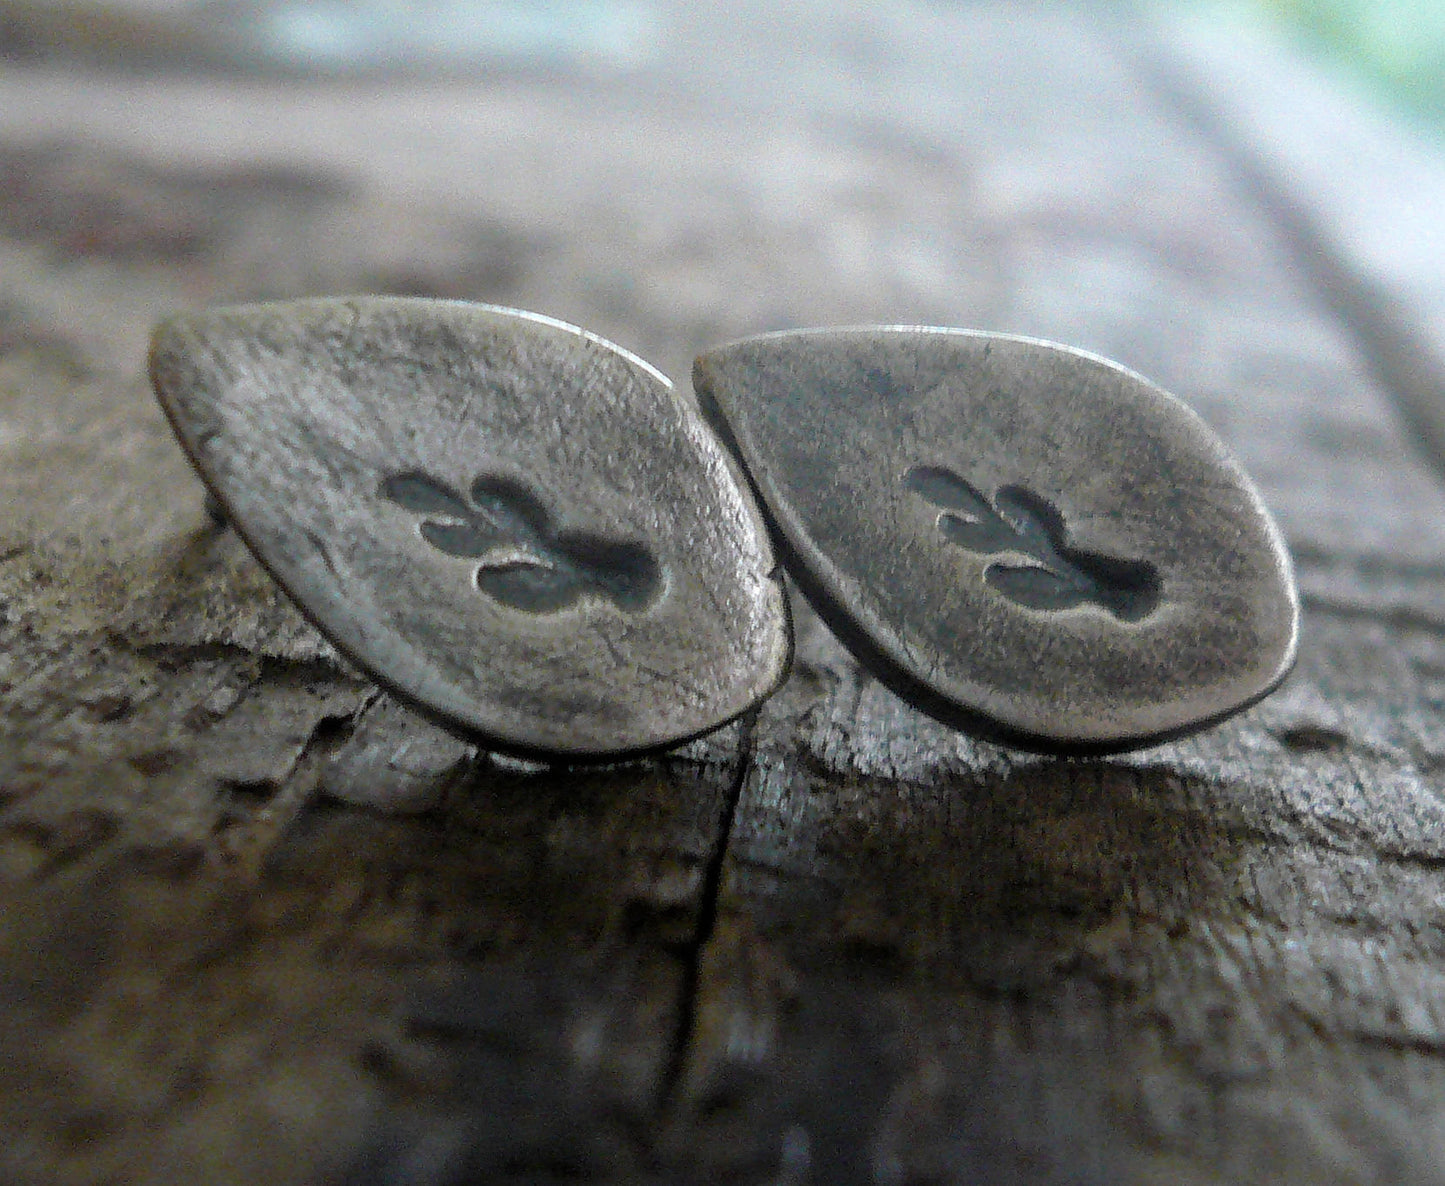 Botanical Stud Earrings- Leaves - Oxidized Sterling and Fine Silver Post Earrings. Handmad